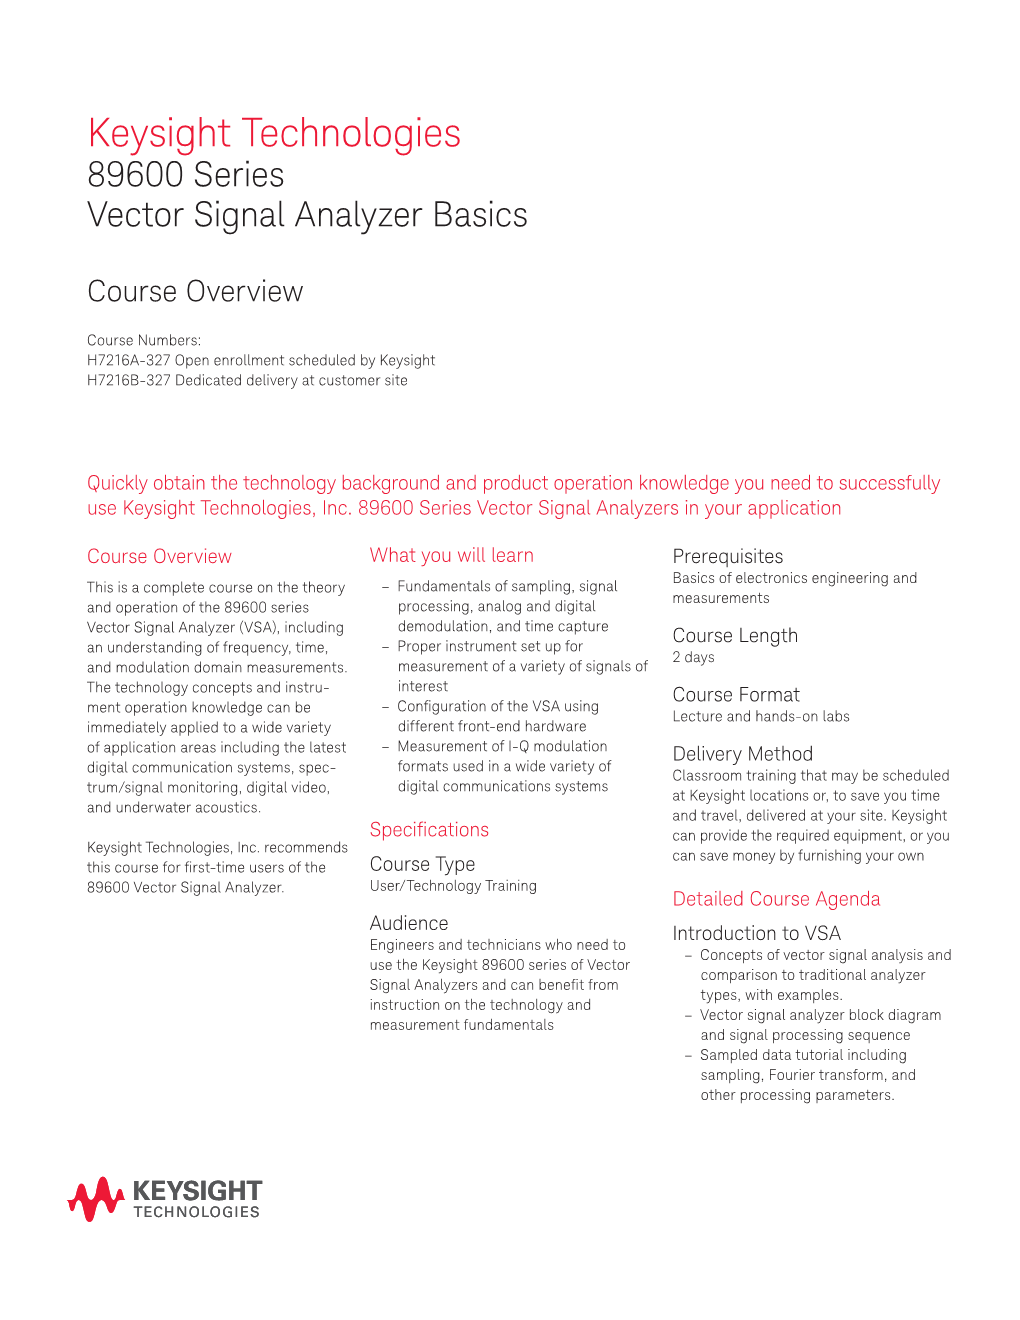 89600 Series 5 Vector Signal Analyzer Basics